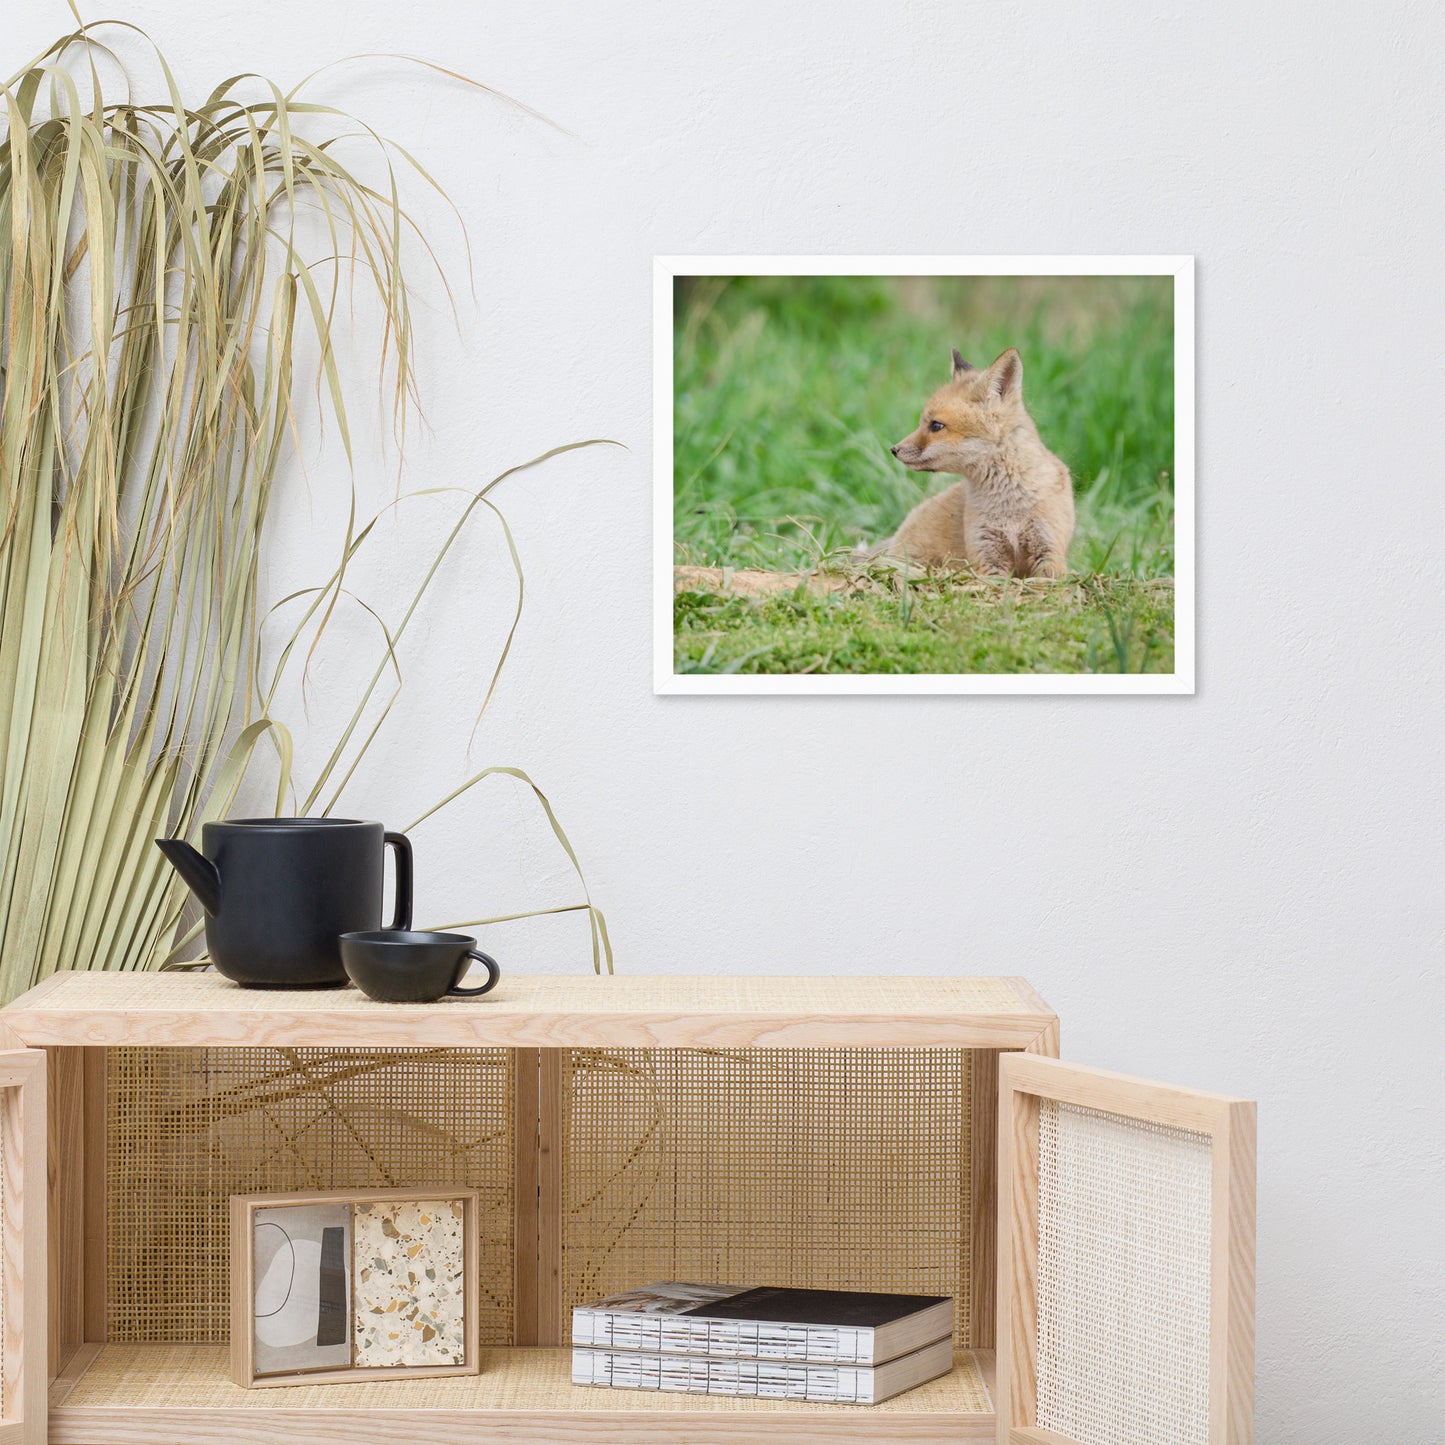 Best Wall Art Bedroom: Red Fox Pups - Chilling/ Animal / Wildlife / Nature Photographic Artwork - Framed Artwork - Wall Decor